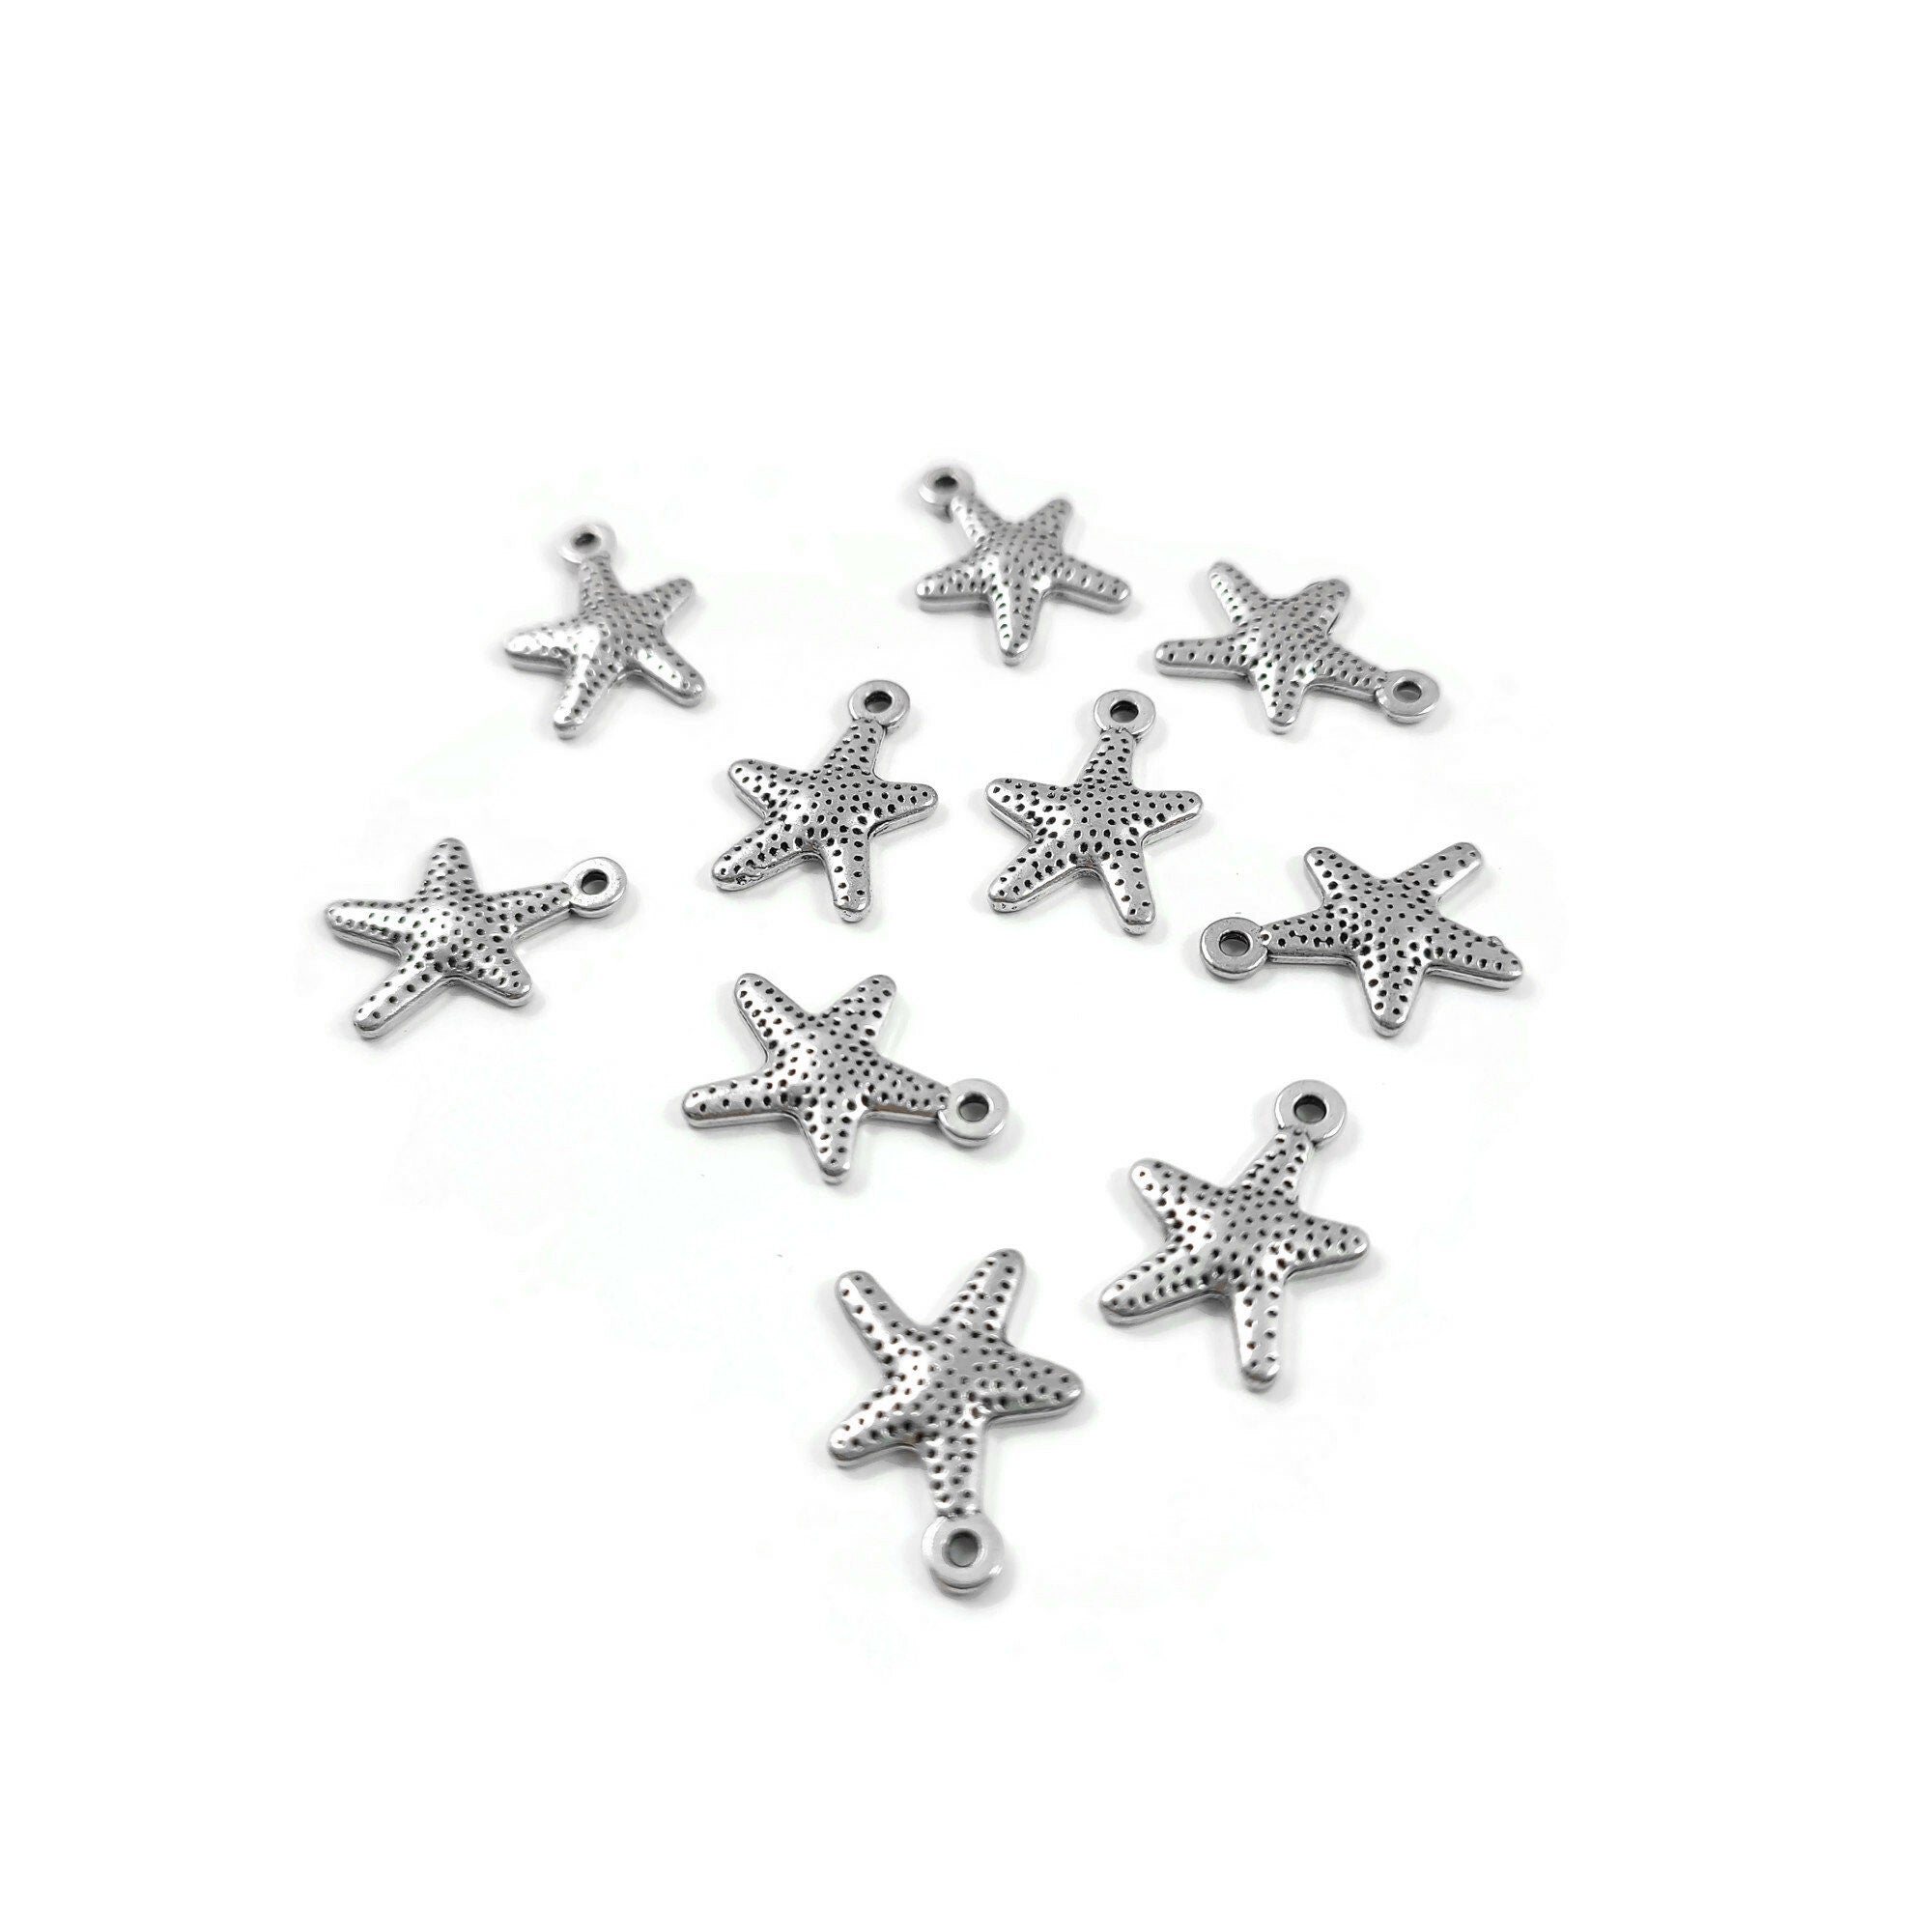 Cute starfish sea star charms, 16mm nickel free ocean pendants, Hypoallergenic nautical jewelry making